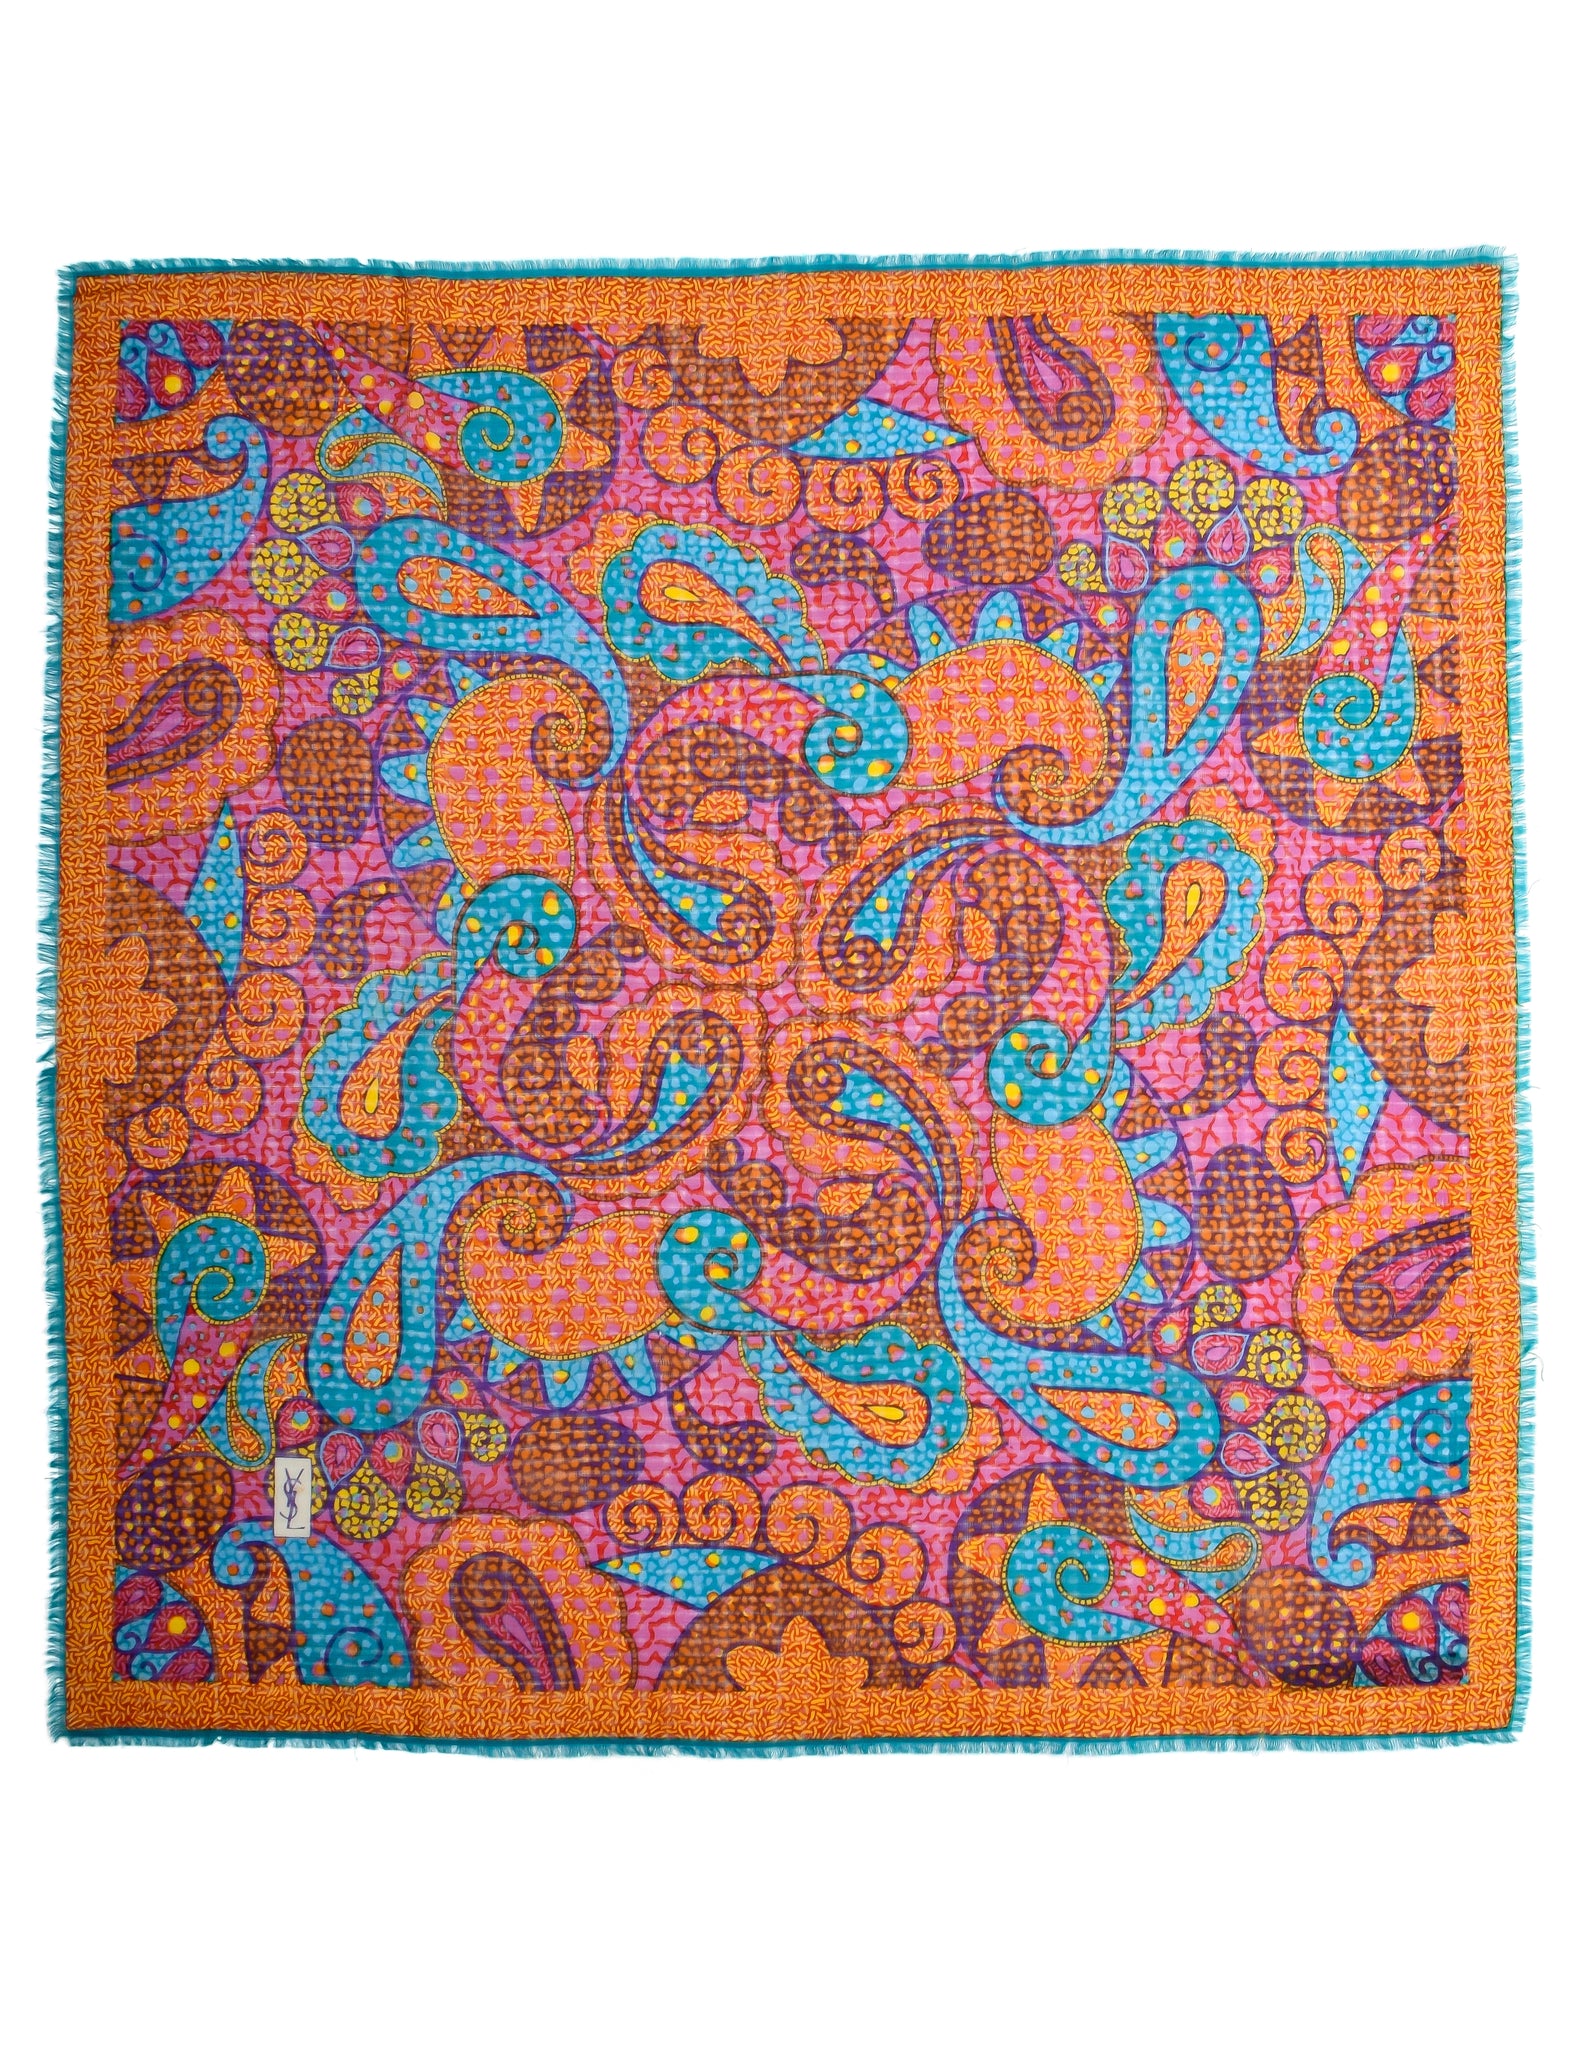 Yves Saint Laurent Vintage 1970s Vibrant Multicolor Paisley Mosaic Woven Wool Scarf